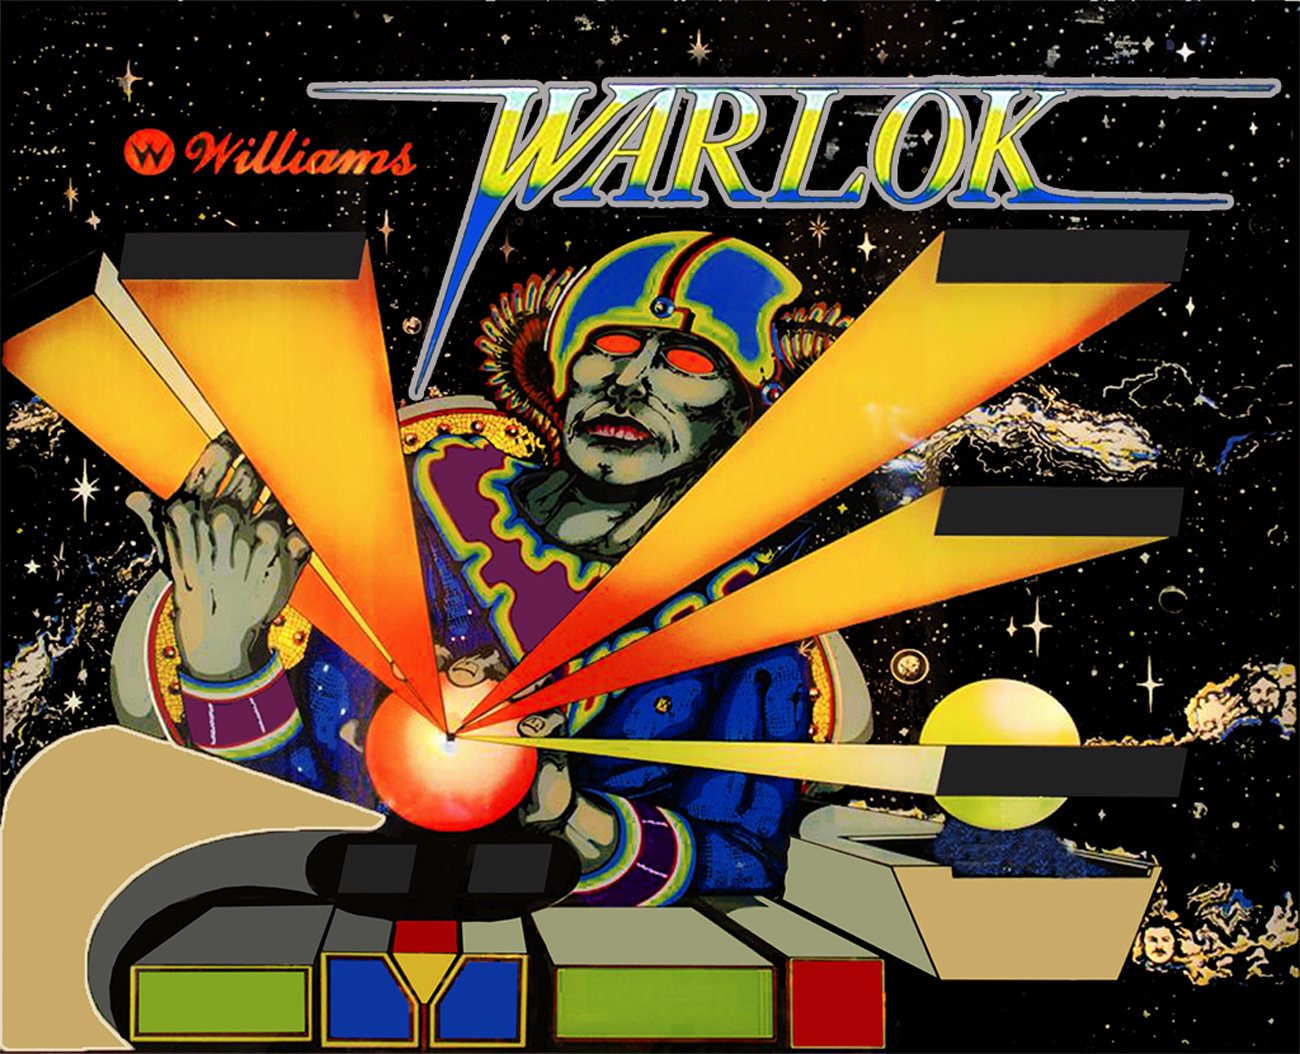 WARLOK (Williams, 1982) BG